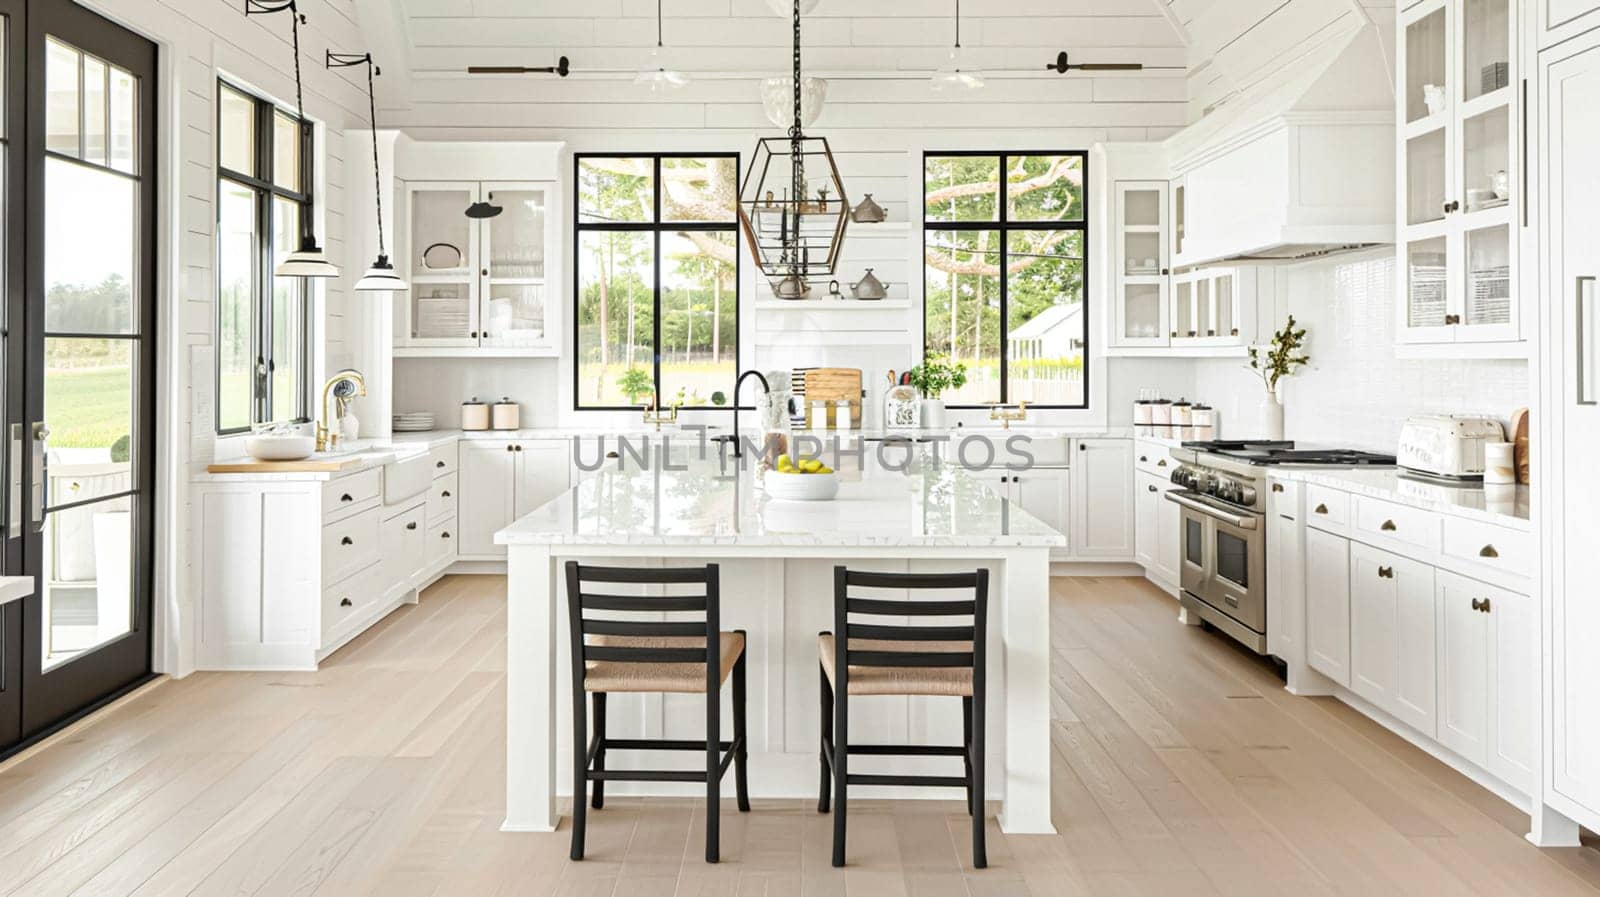 White modern kitchen in a beautiful coastal cottage by Olayola